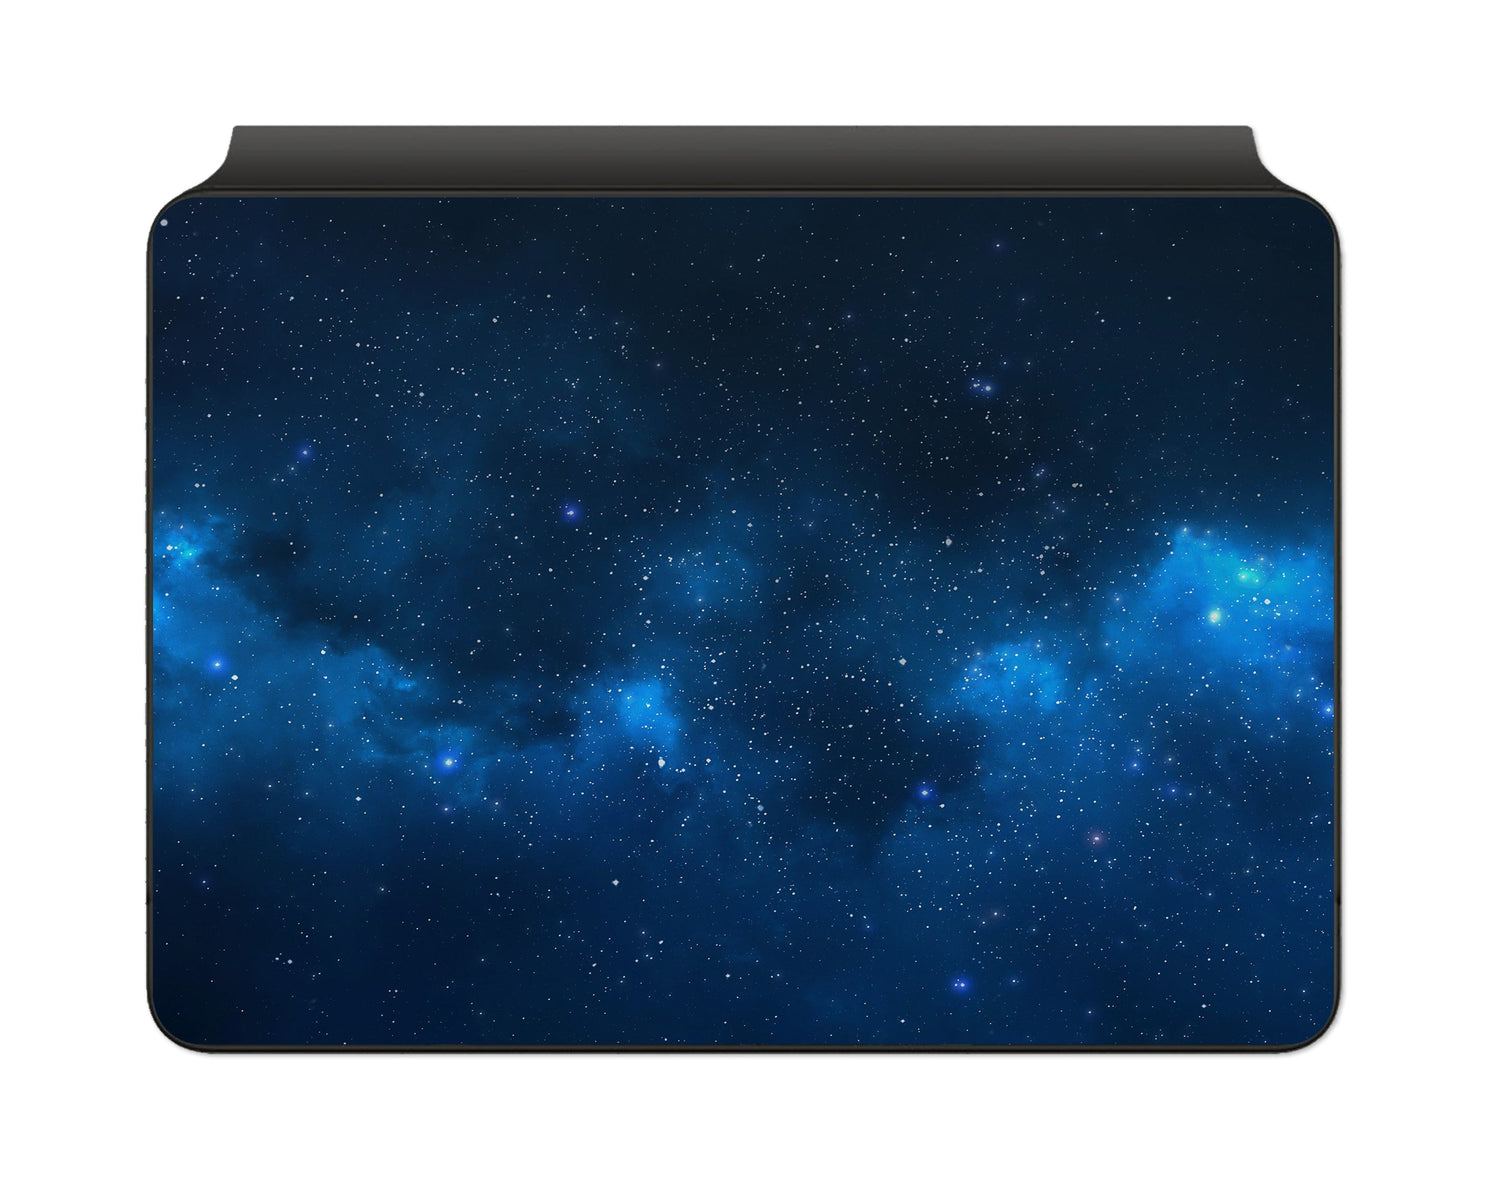 Lux Skins Magic Keyboard Blue Stardust Galaxy iPad Air Skins - Galaxy Artwork Skin